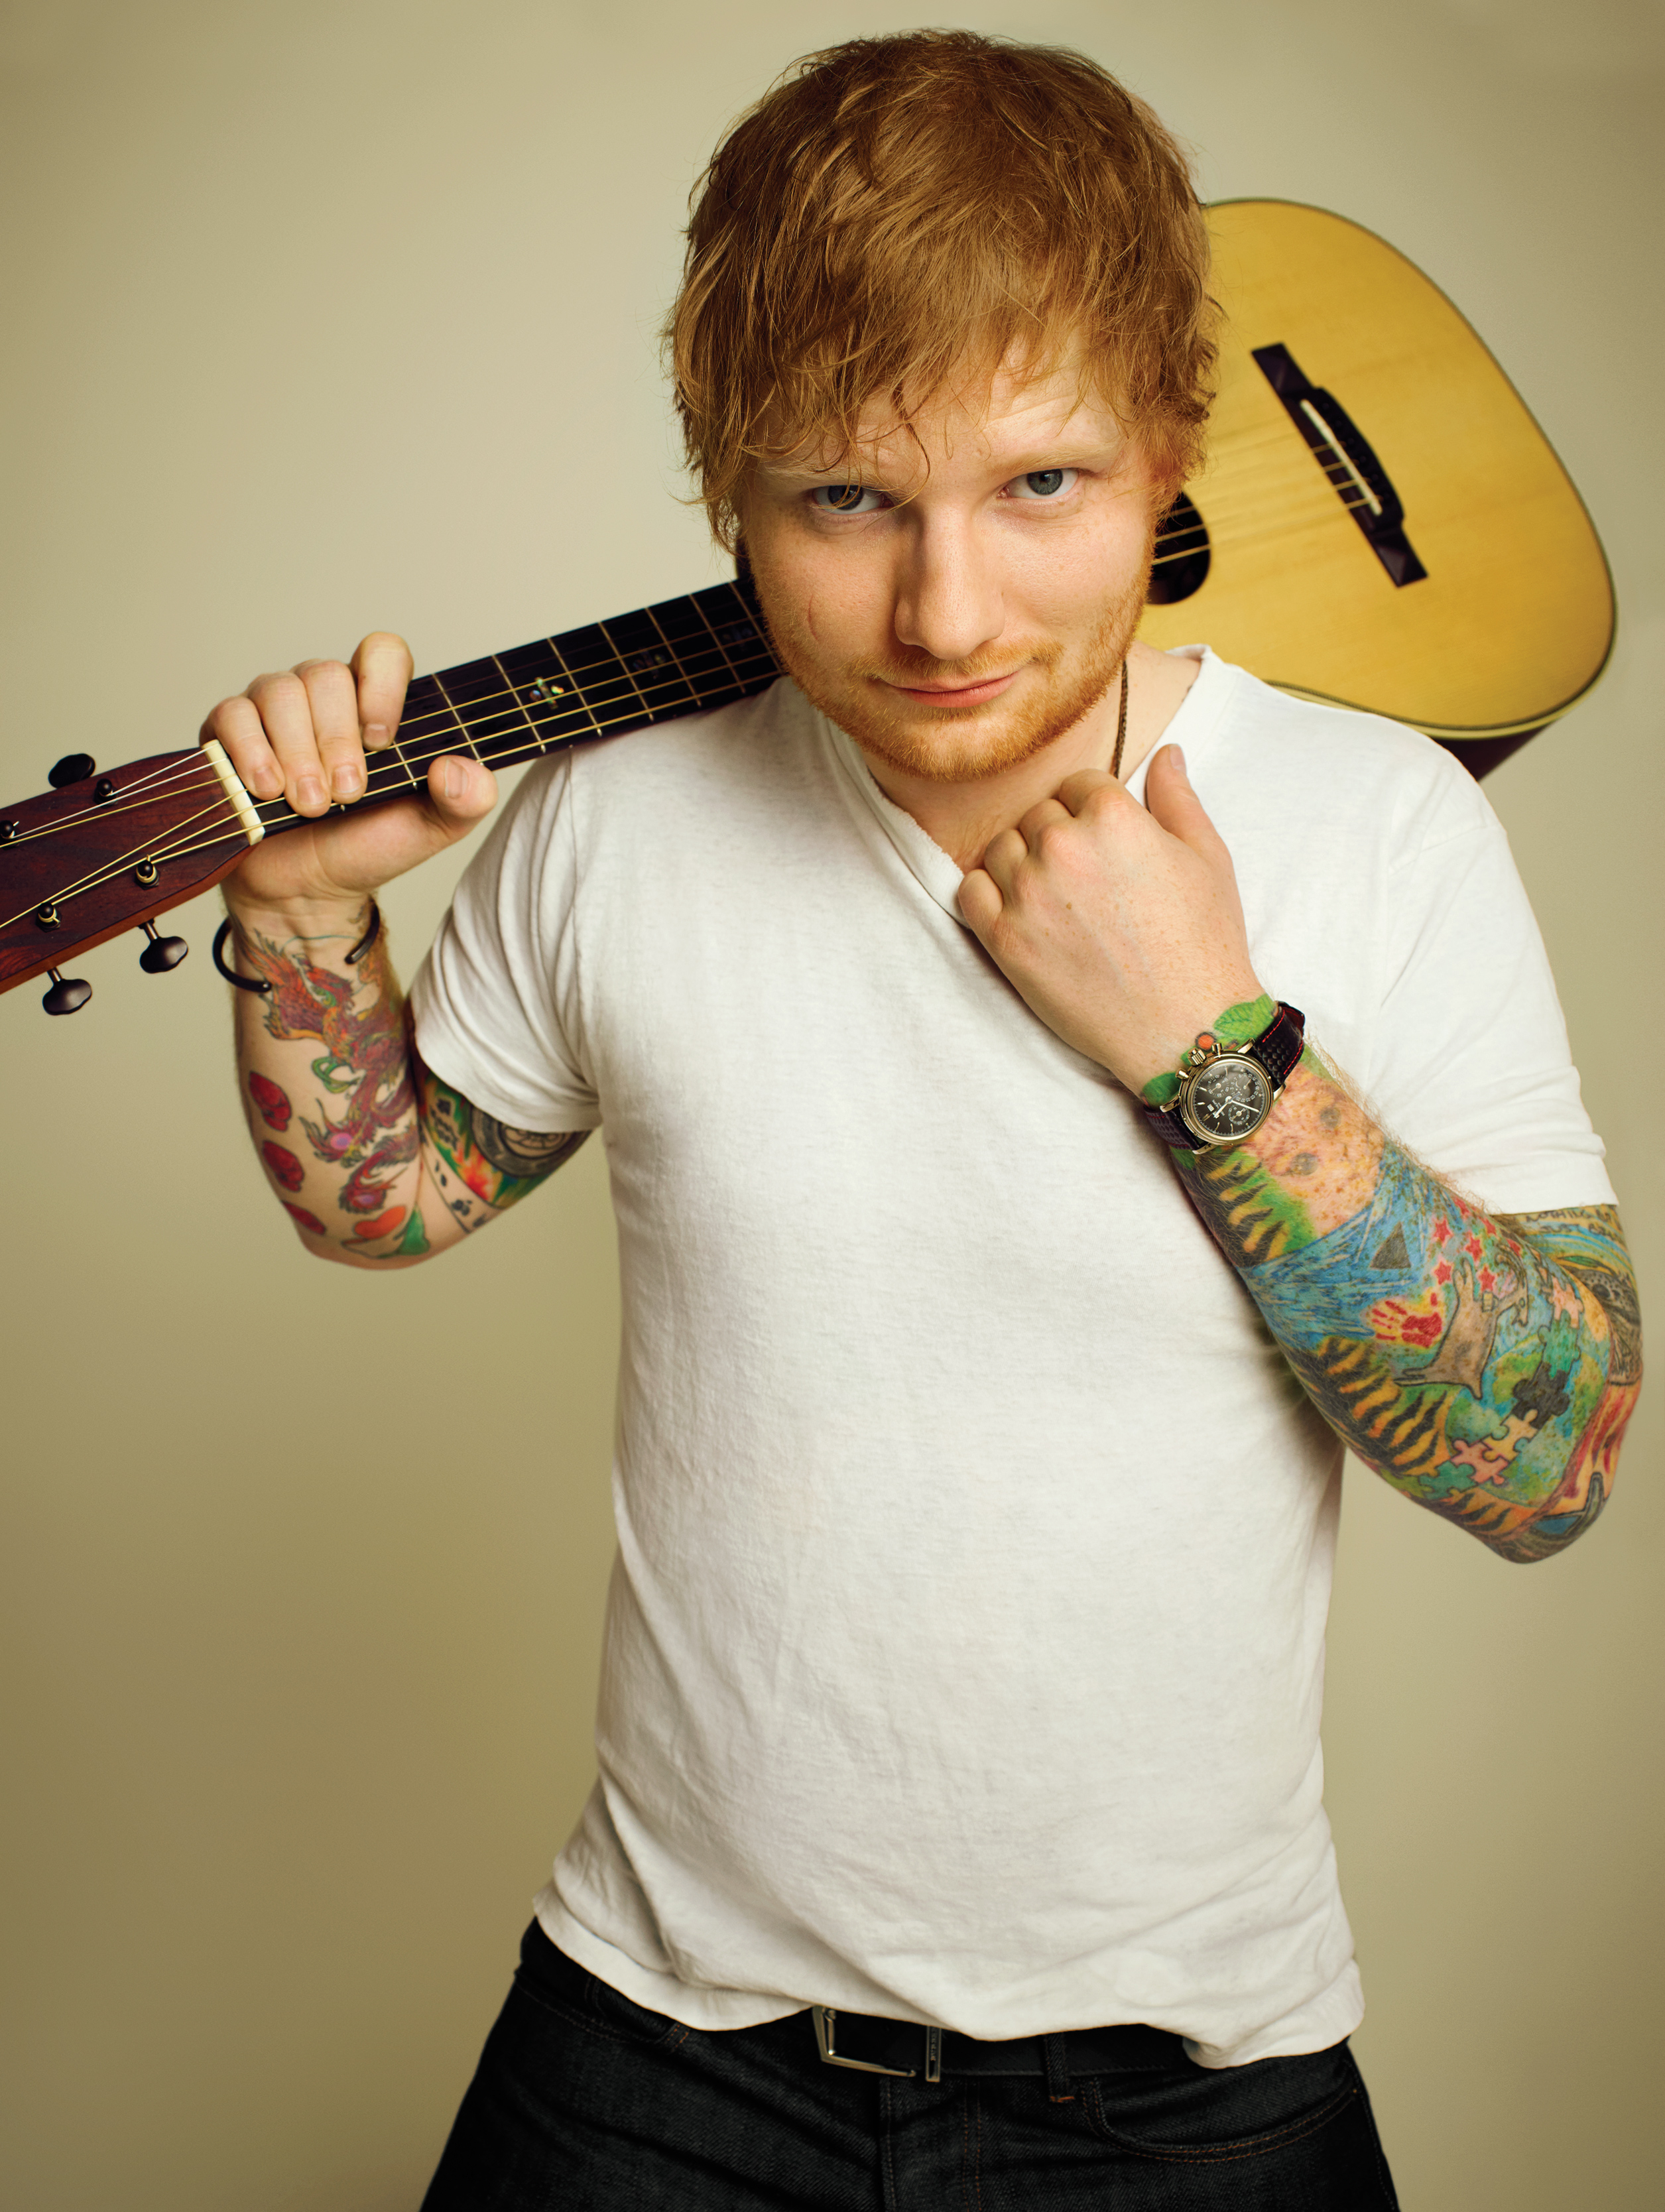 Ed Sheeran Be Like You chords